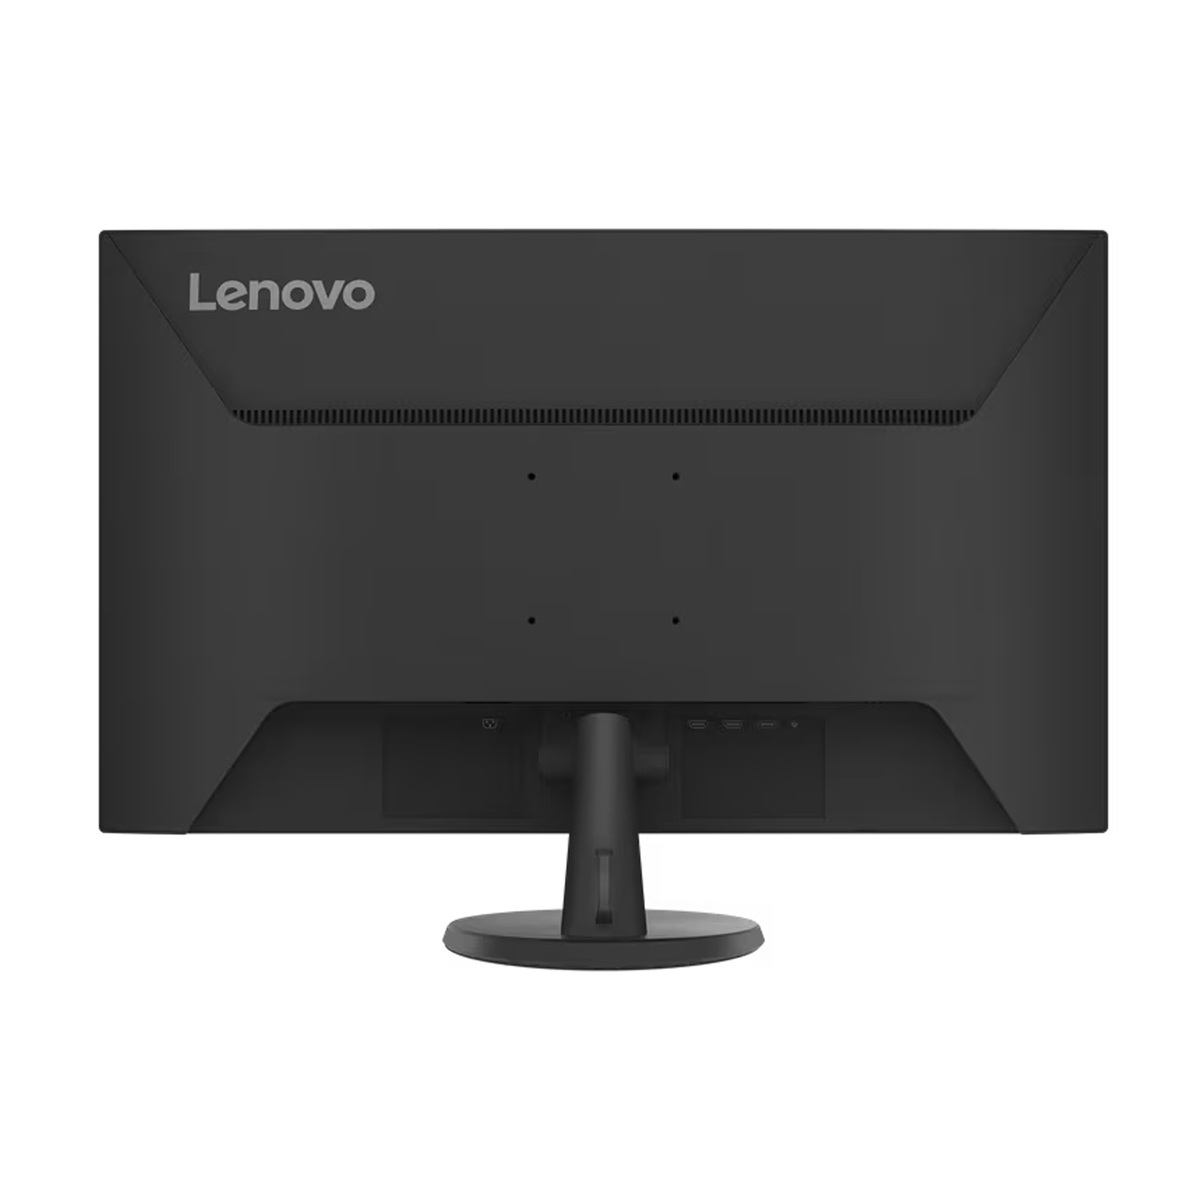 Lenovo 31.5 Inches 4K UHD Display with Backlight WLED, Raven Black, D32u-40